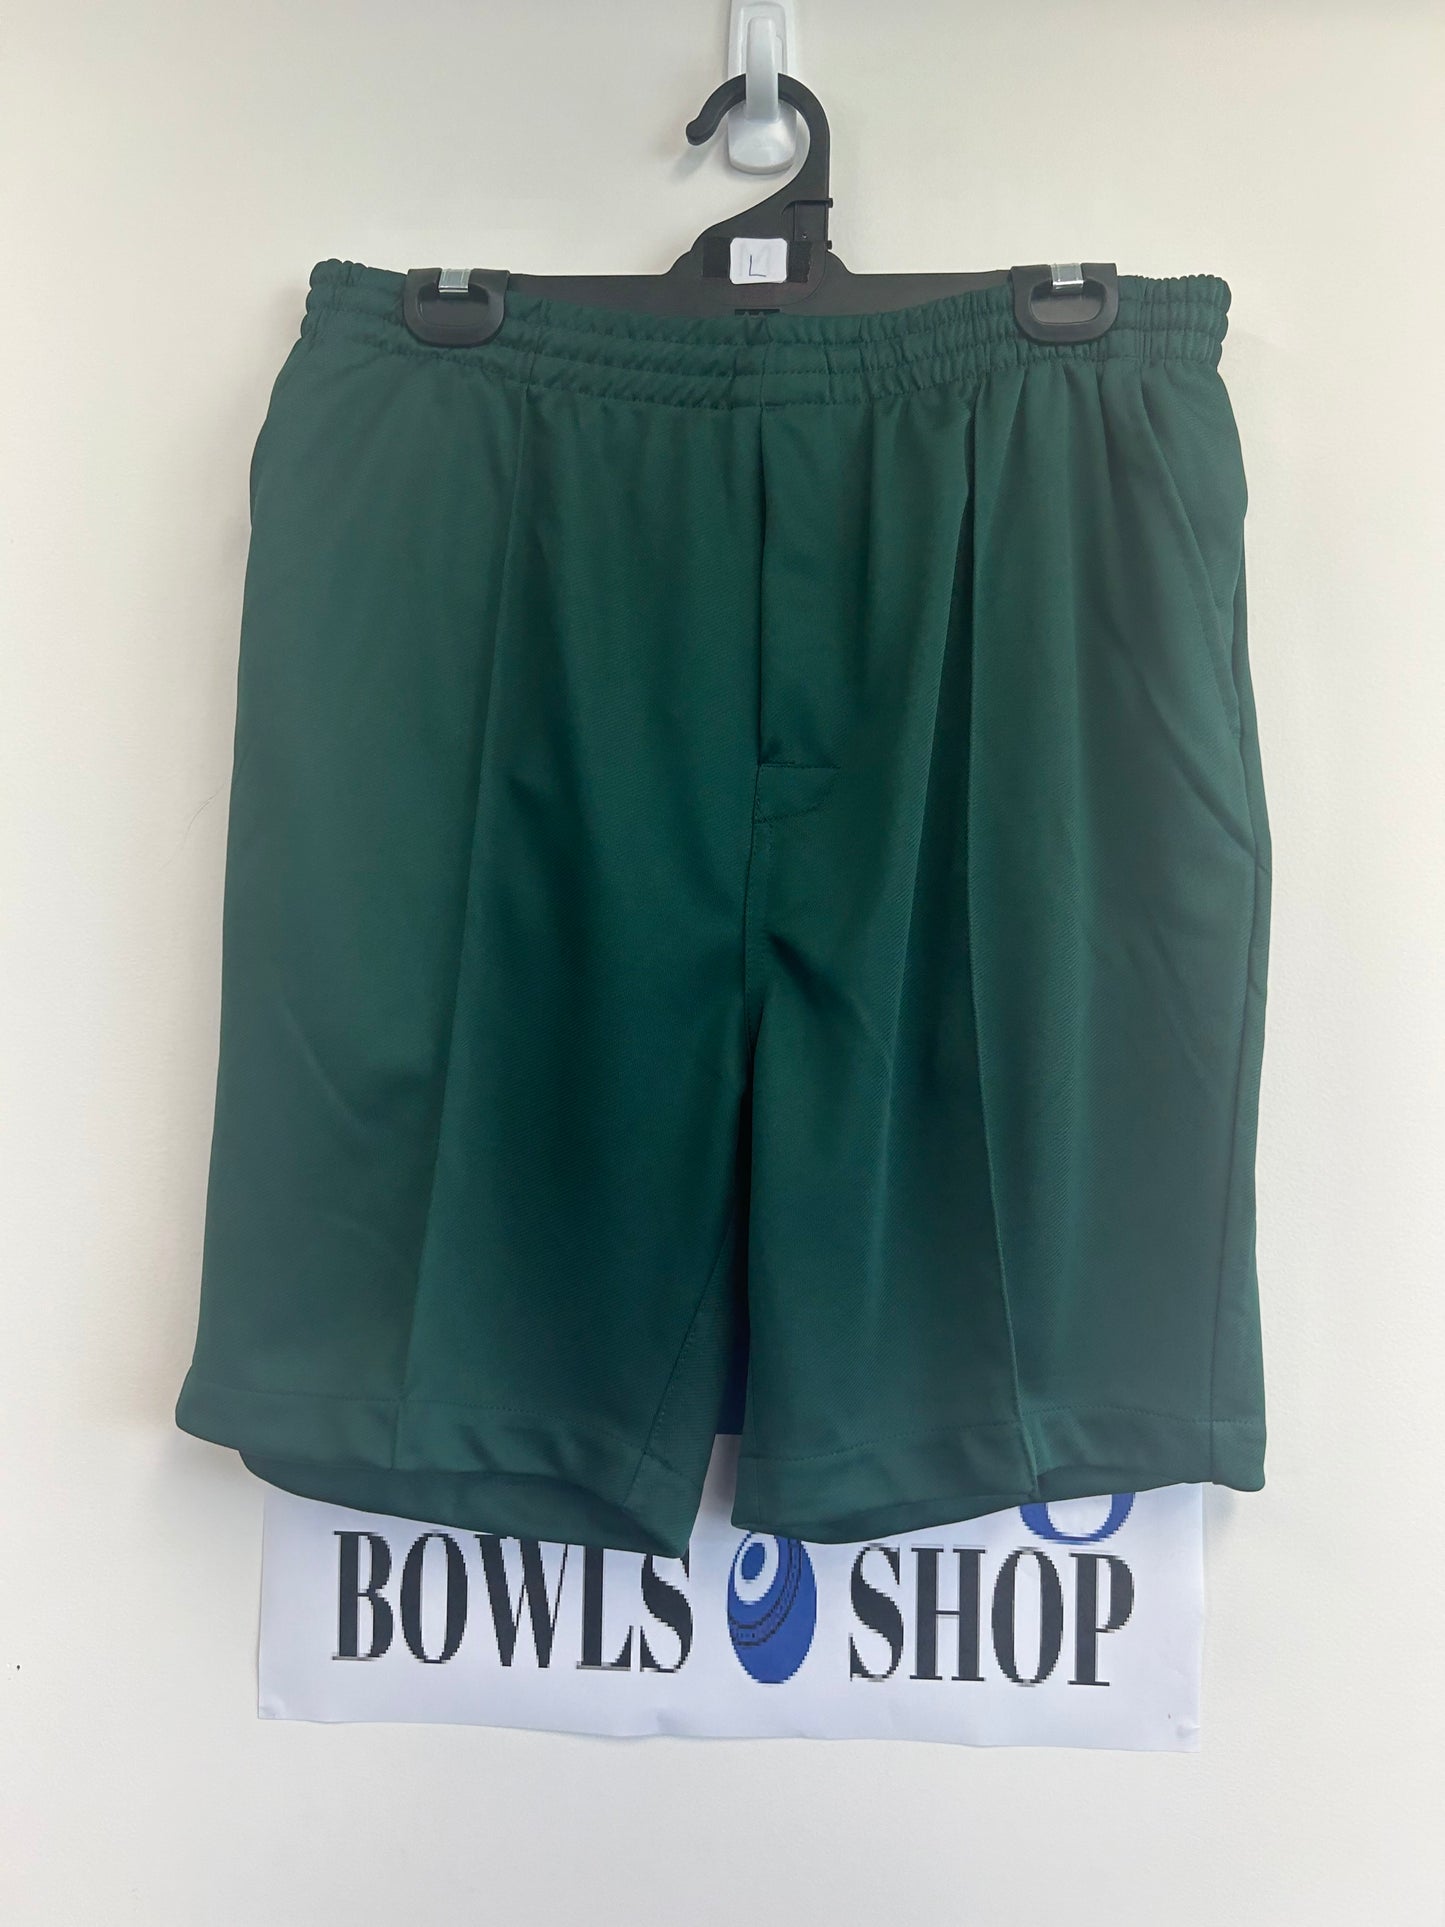 Bowlswear Australia Mens Track Shorts